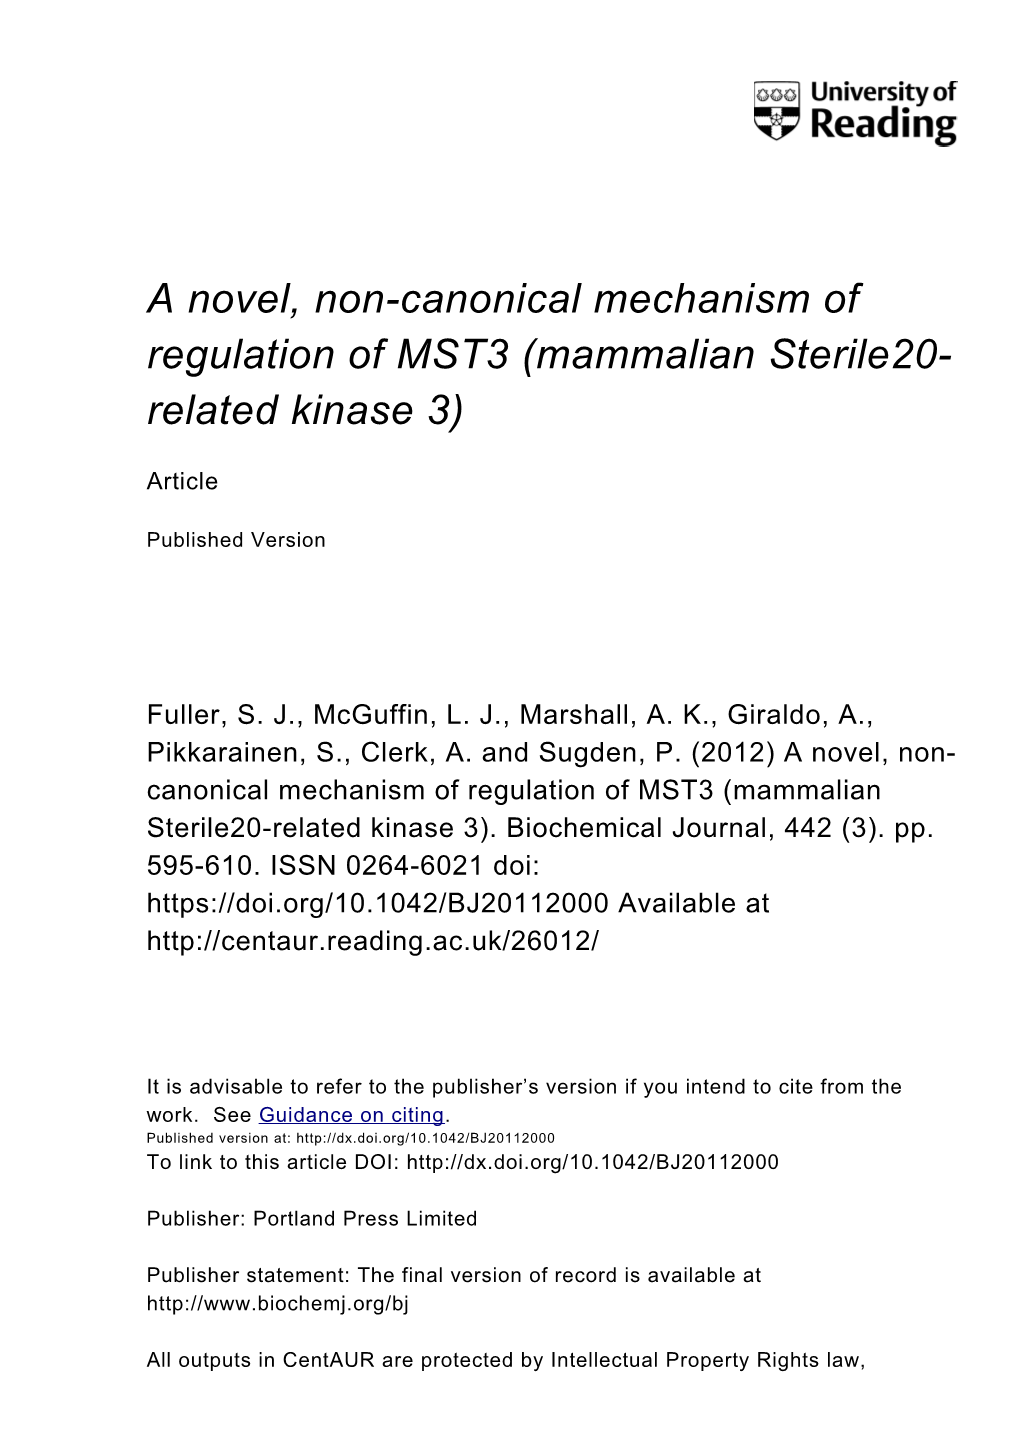 A Novel, Non-Canonical Mechanism of Regulation of MST3 (Mammalian Sterile20- Related Kinase 3)